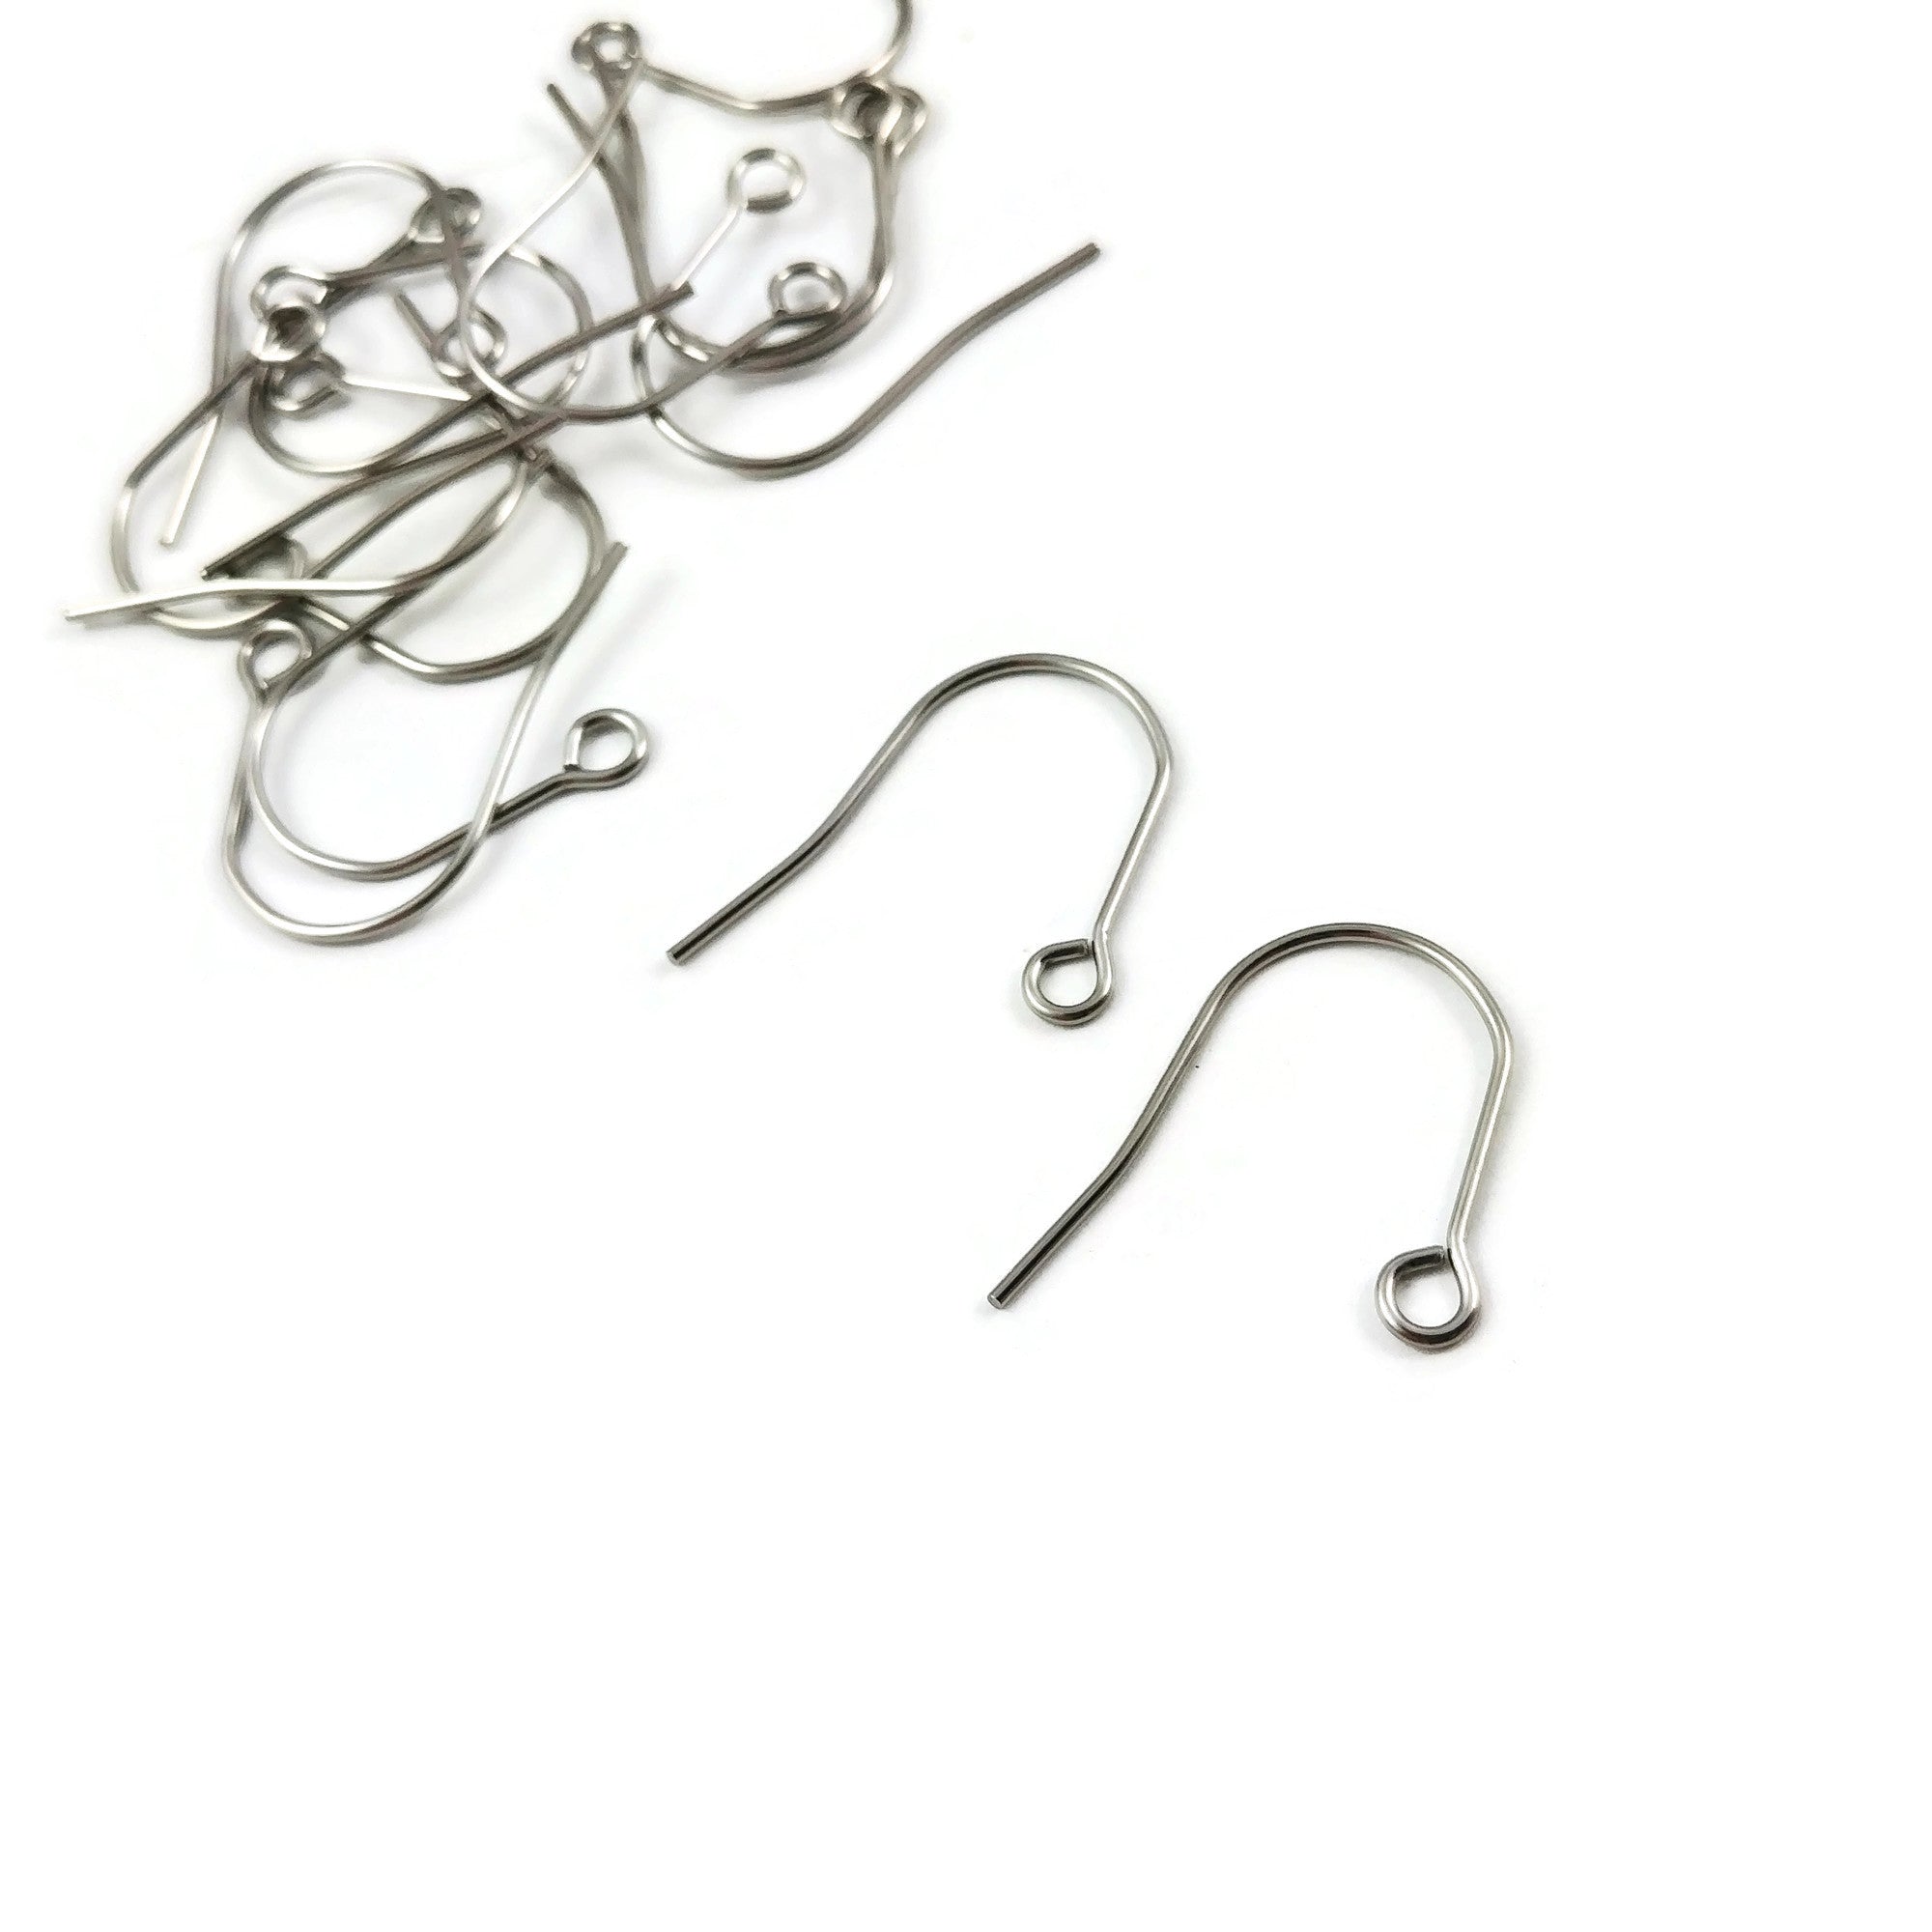 304 Stainless Steel French Earring Hooks, Flat Earring Hooks, Ear